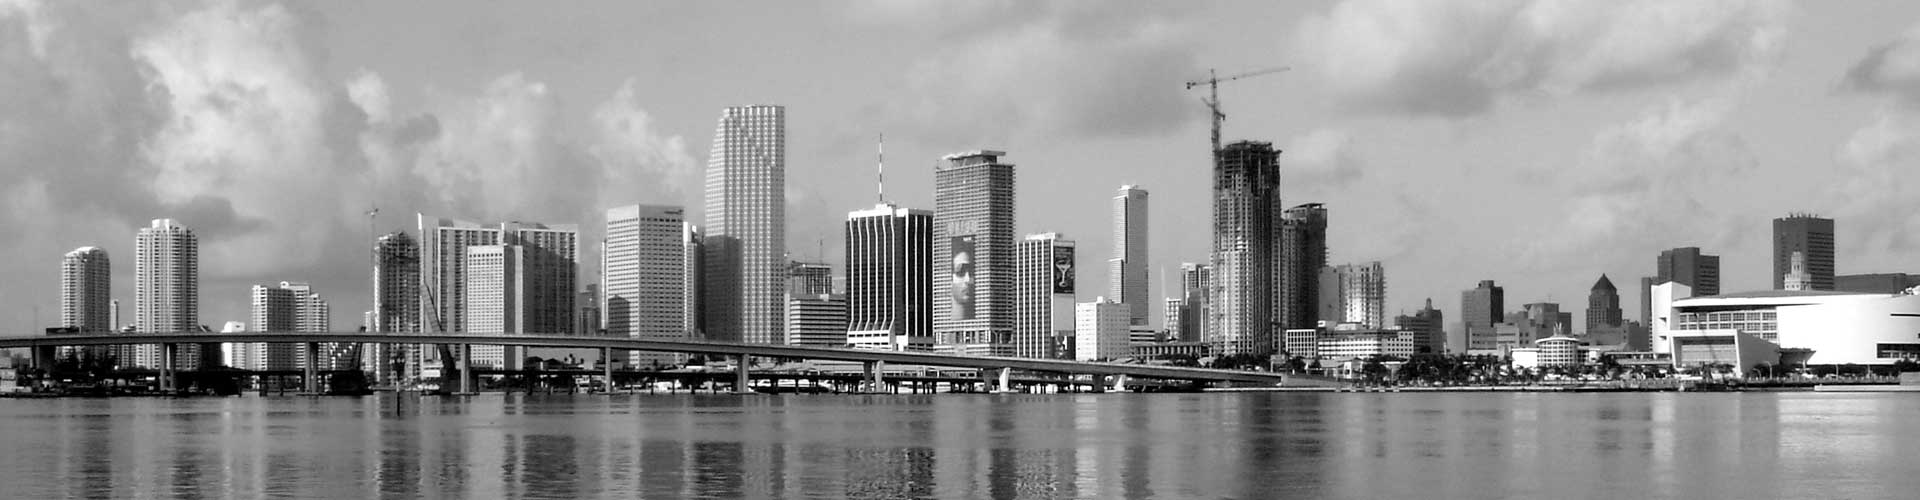 Downtown Miami | Miami-Dade County | Paradigm Construction Group of South Florida